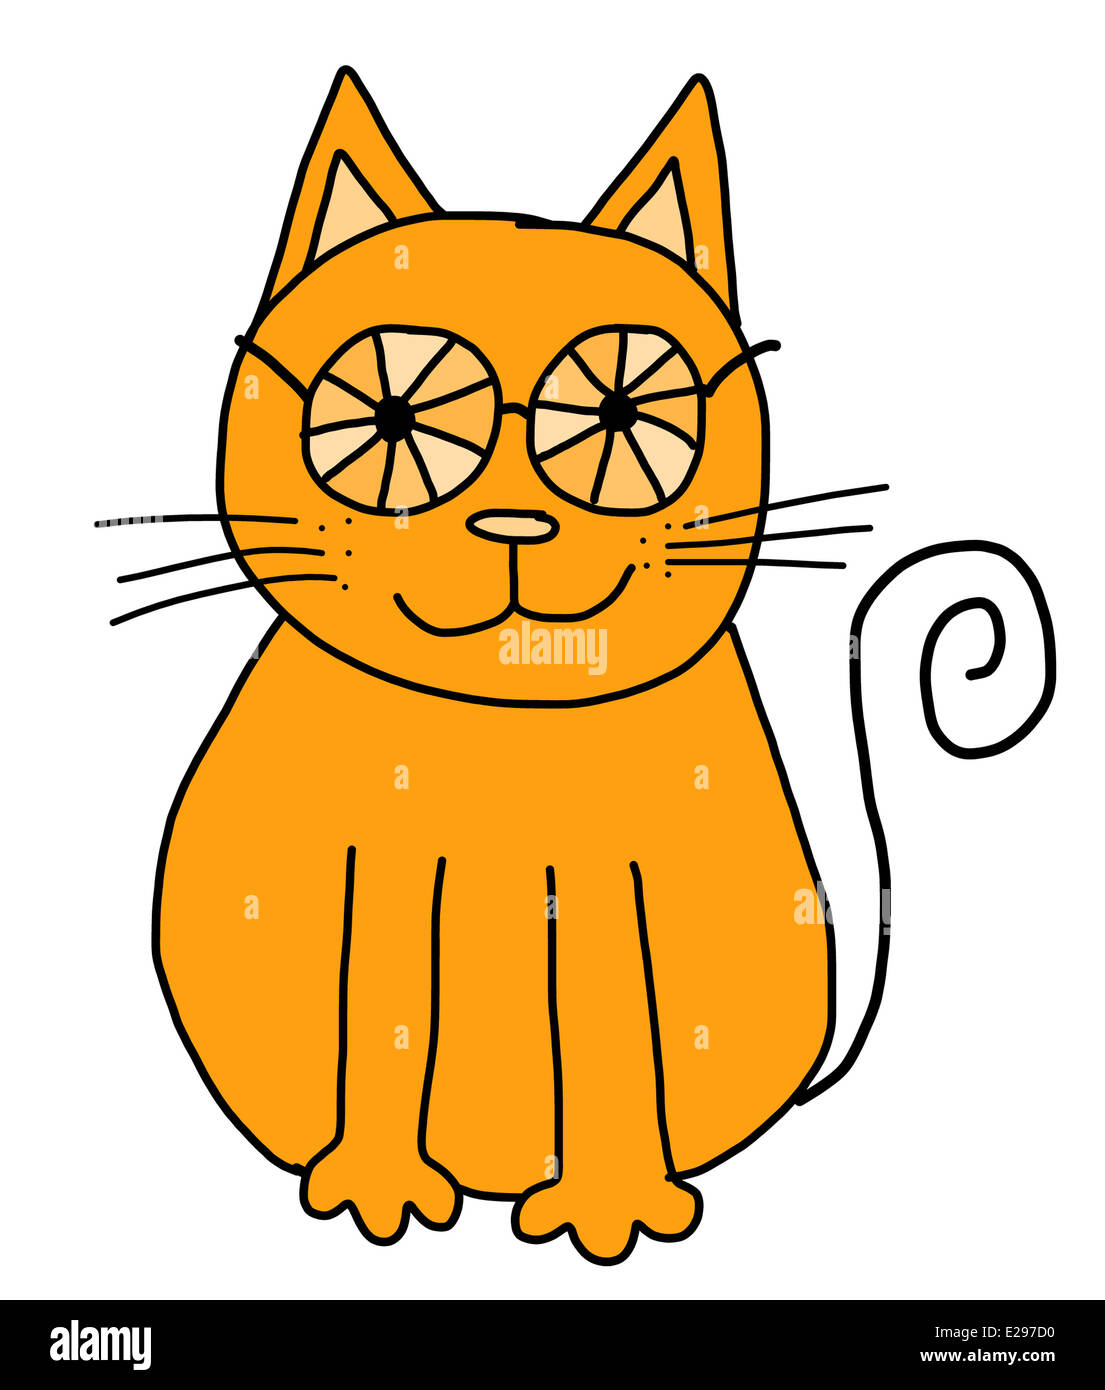 Illustration of an orange cat wearing sunglasses Stock Photo